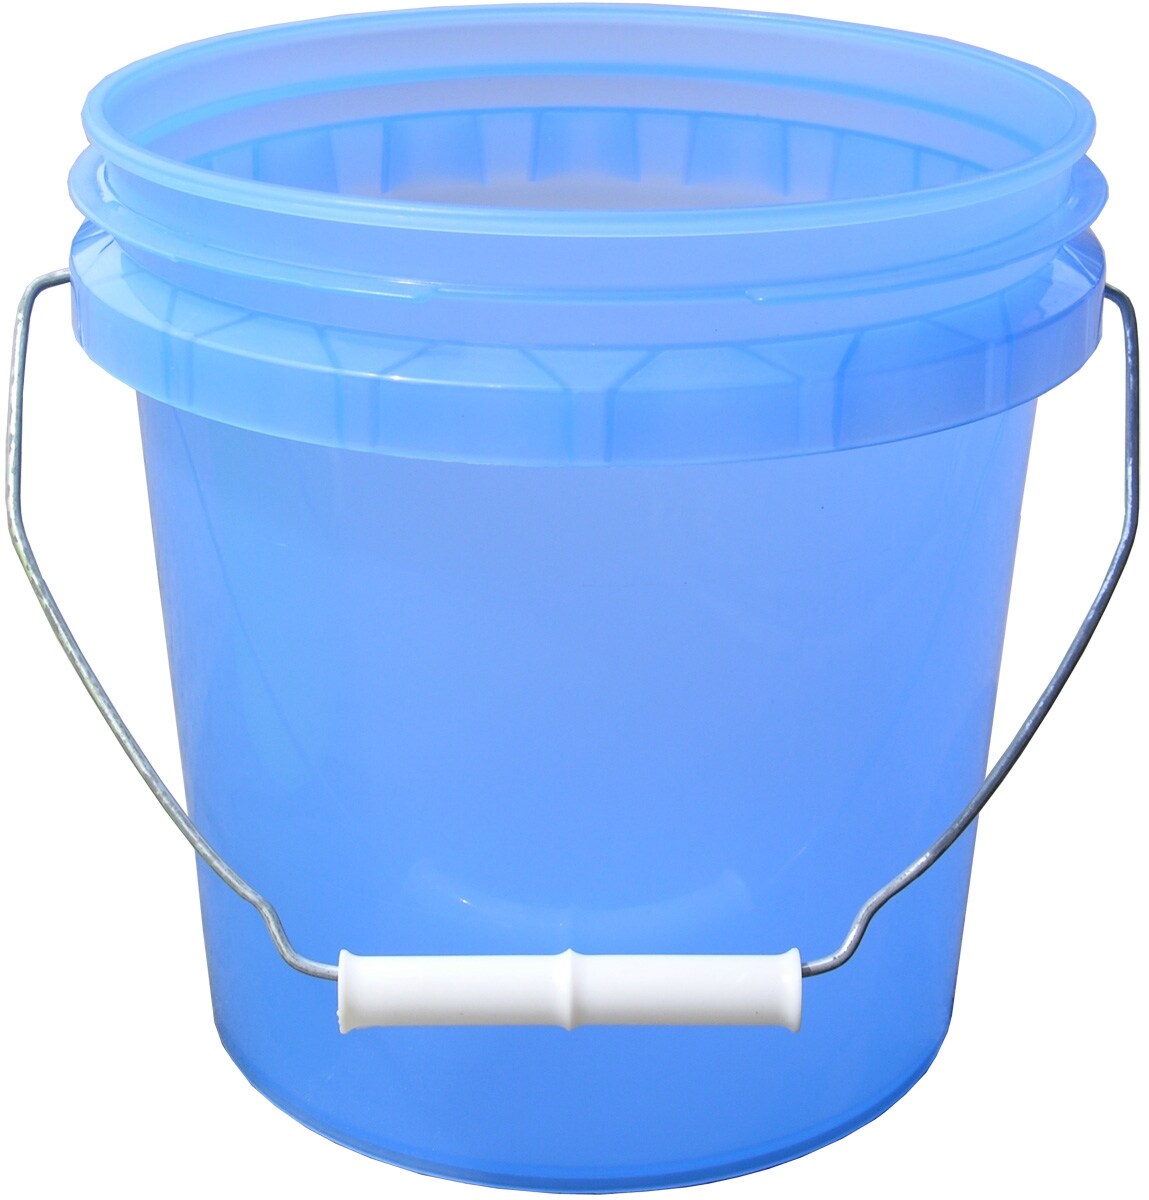 Encore Plastics 5-Gallon (s) Food-grade Plastic General Bucket in